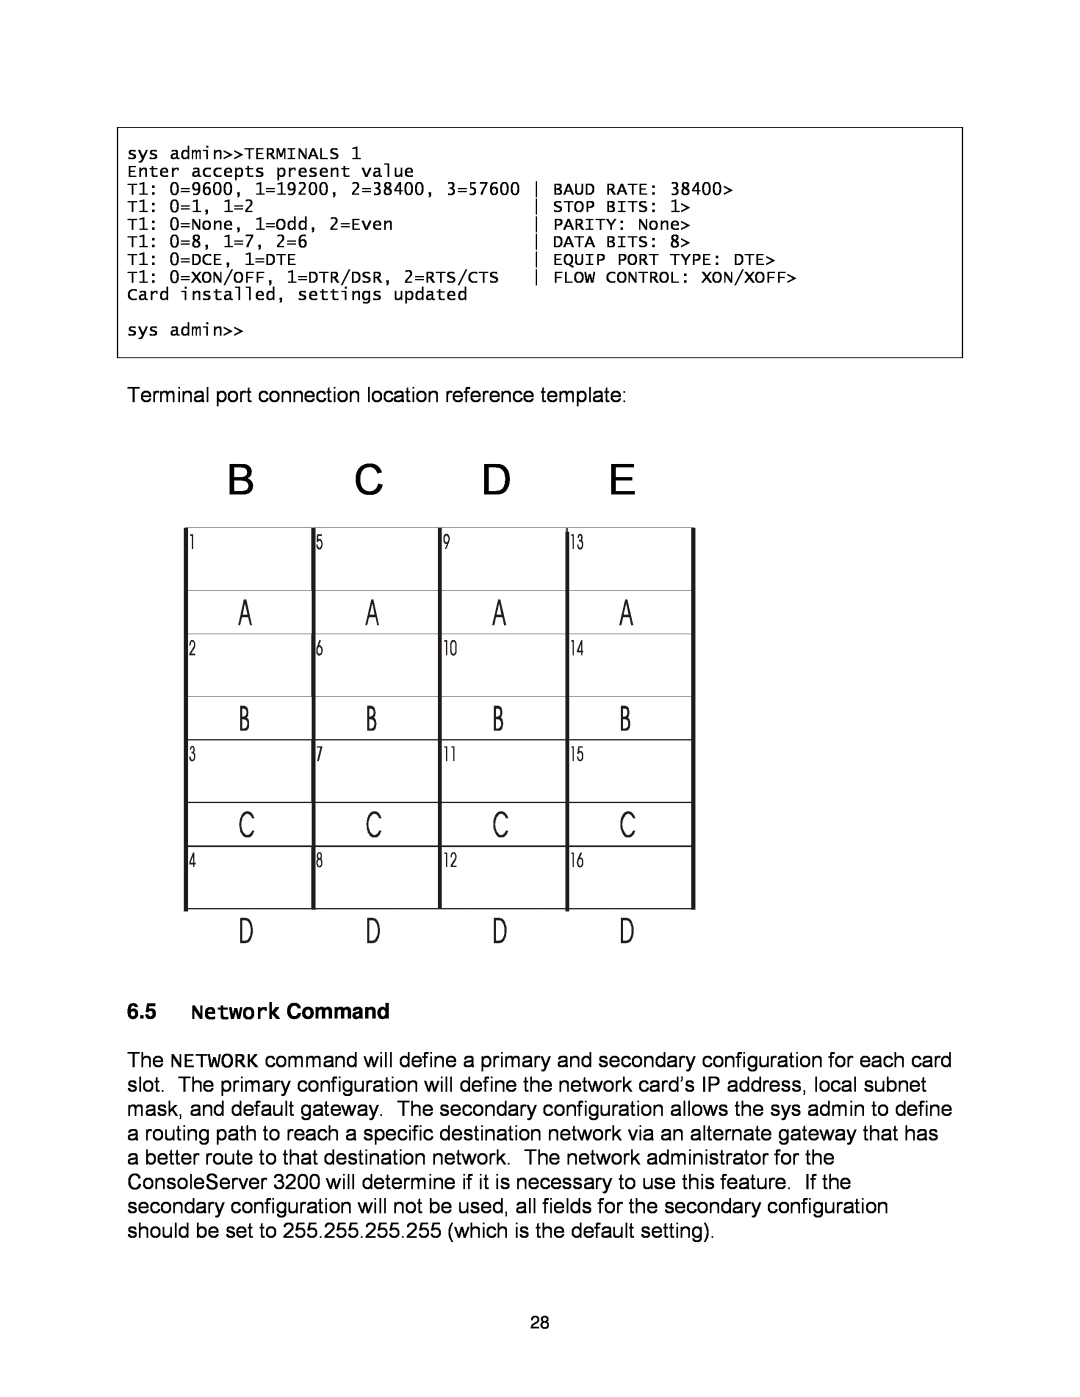 Lightwave Communications 3200 user manual B C D E, Network Command 